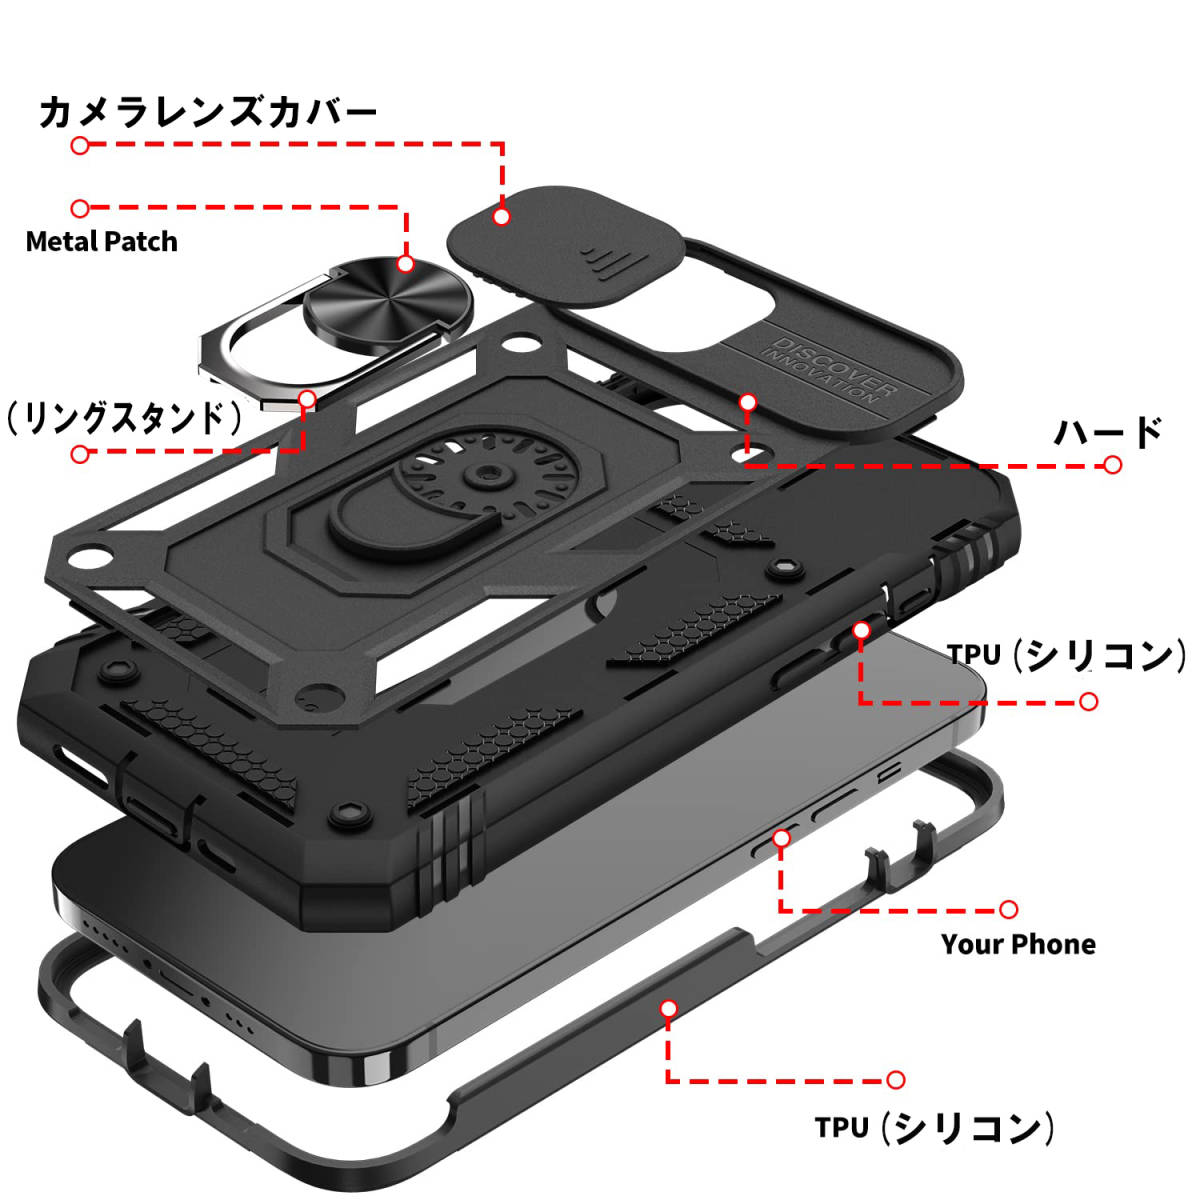 G在庫処分 赤 iPhone 12 mini ケース 本体 カバー 指リング 画面 守る 保護 アイフォン 米軍 衝撃 頑丈 スタンド ホルダー Apple アップル_画像4